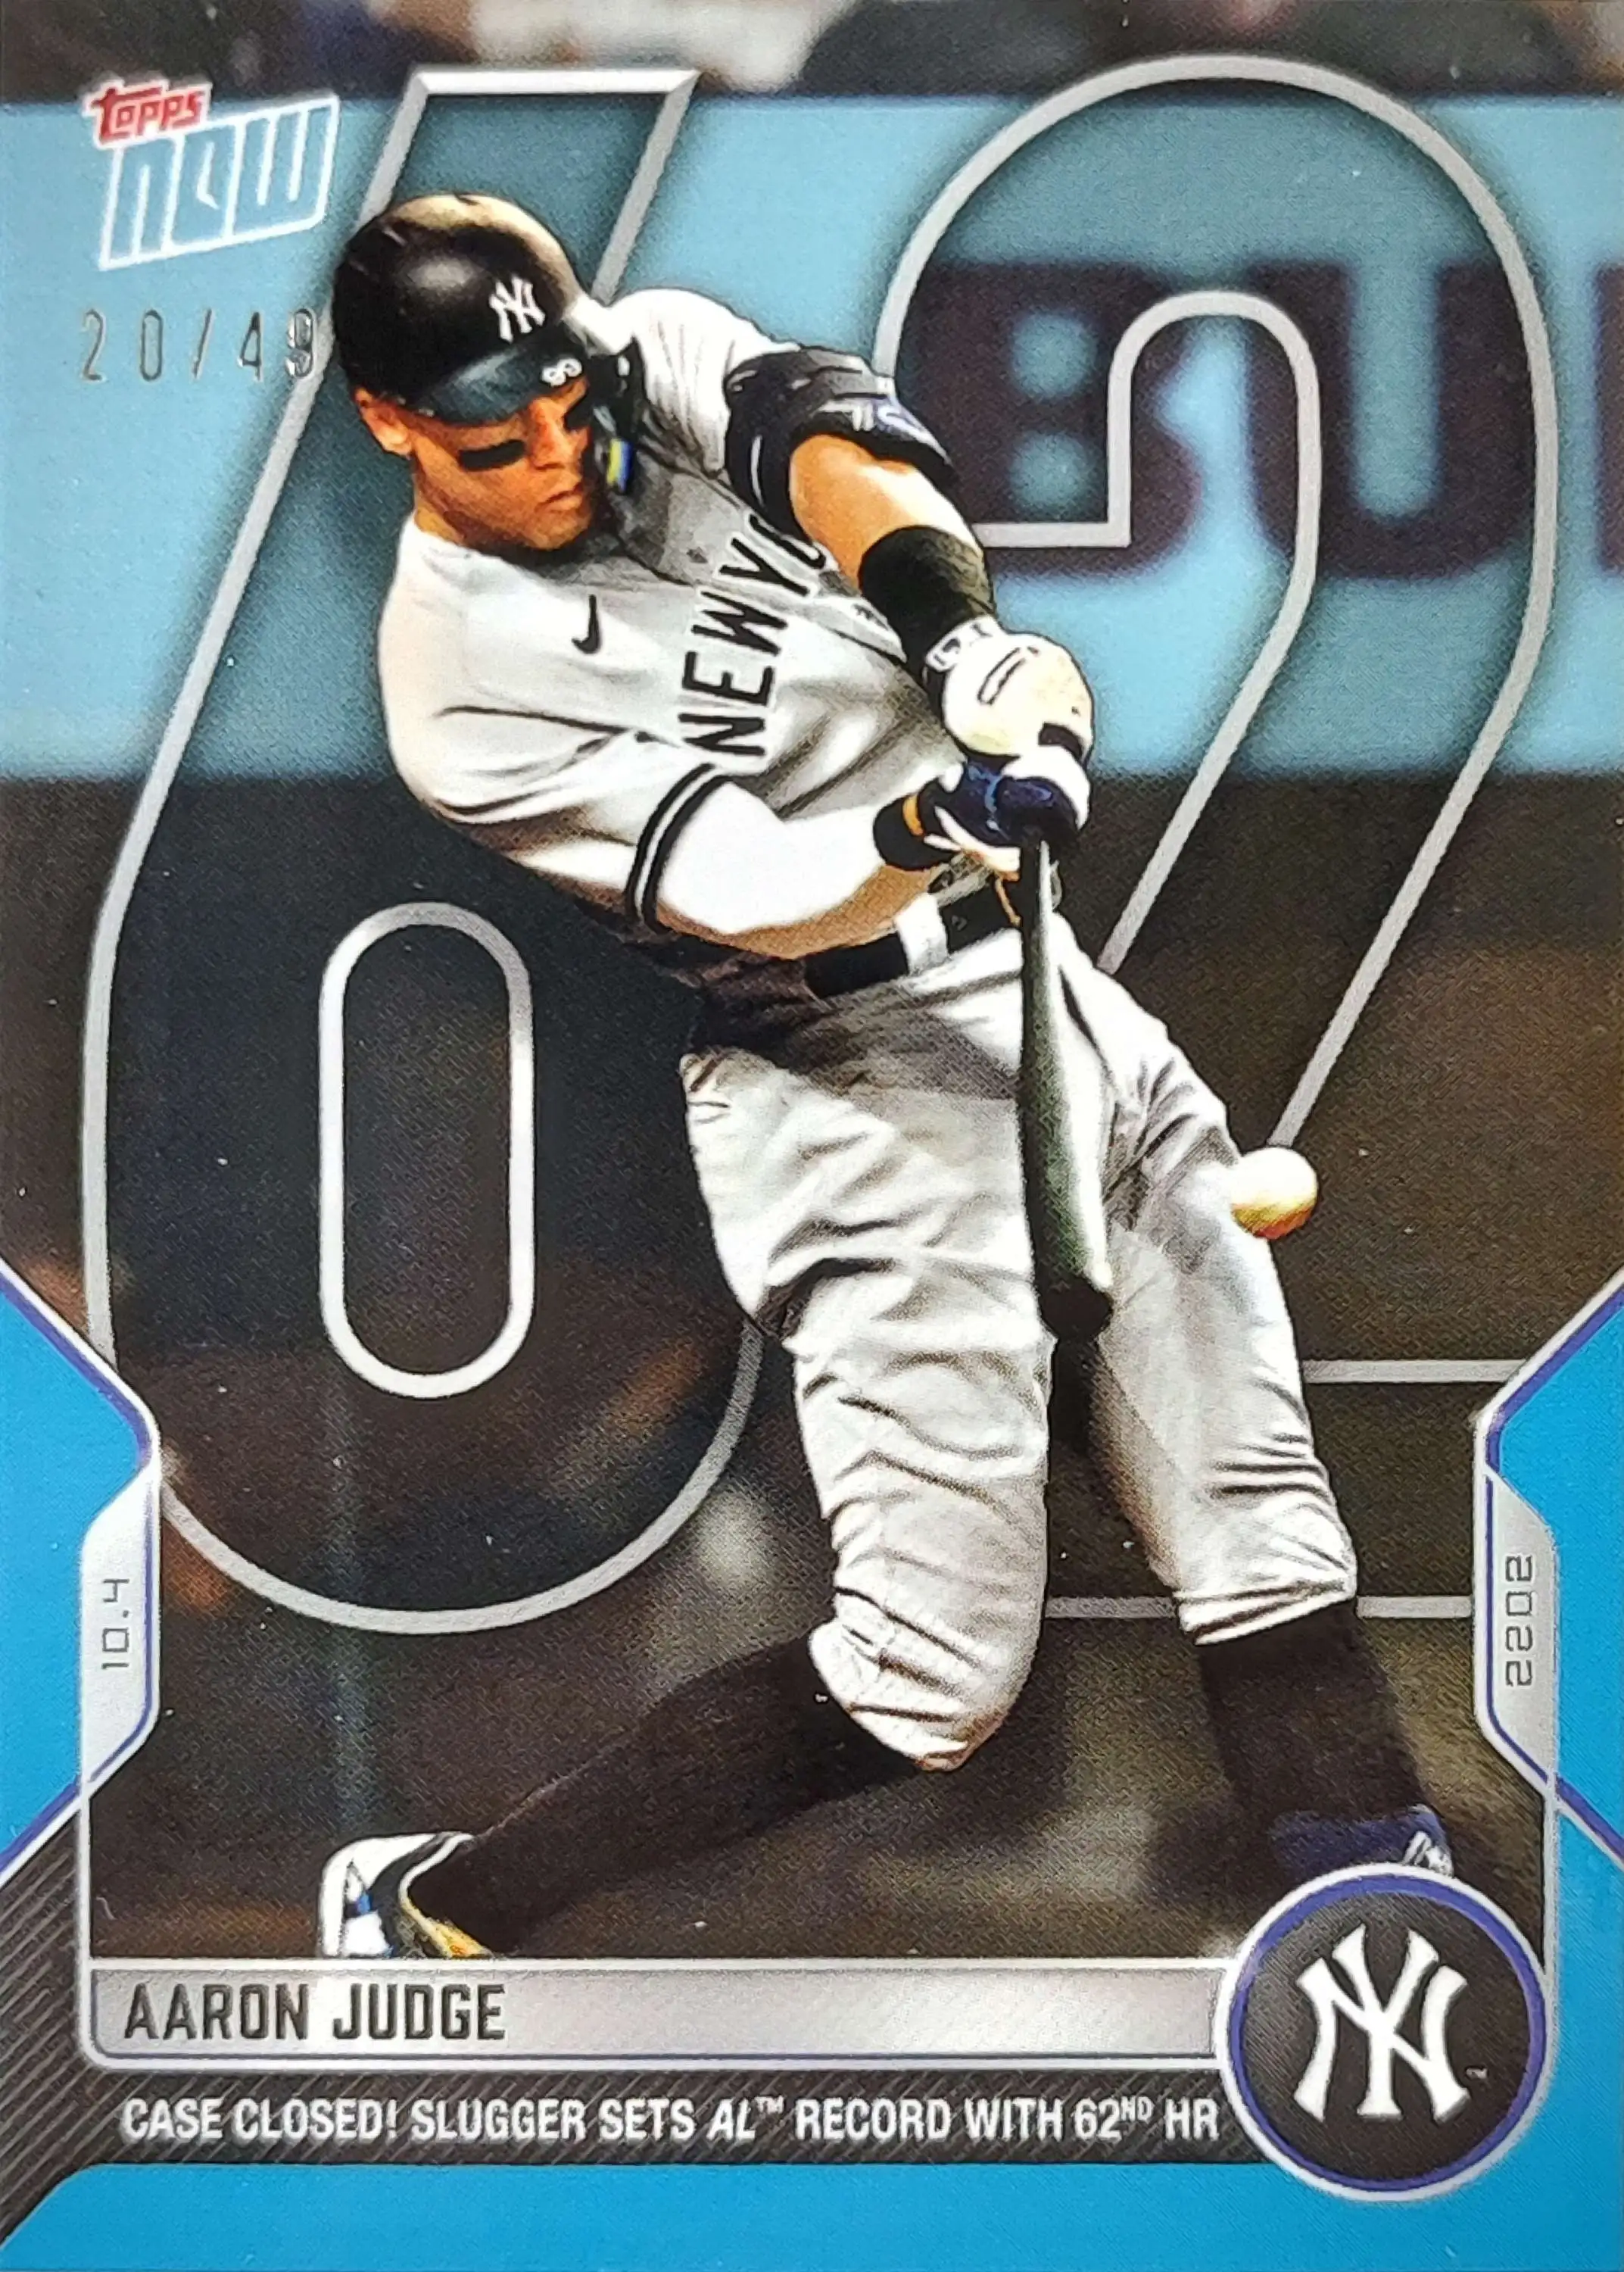 MLB New York Yankees - Aaron Judge 20 Poster